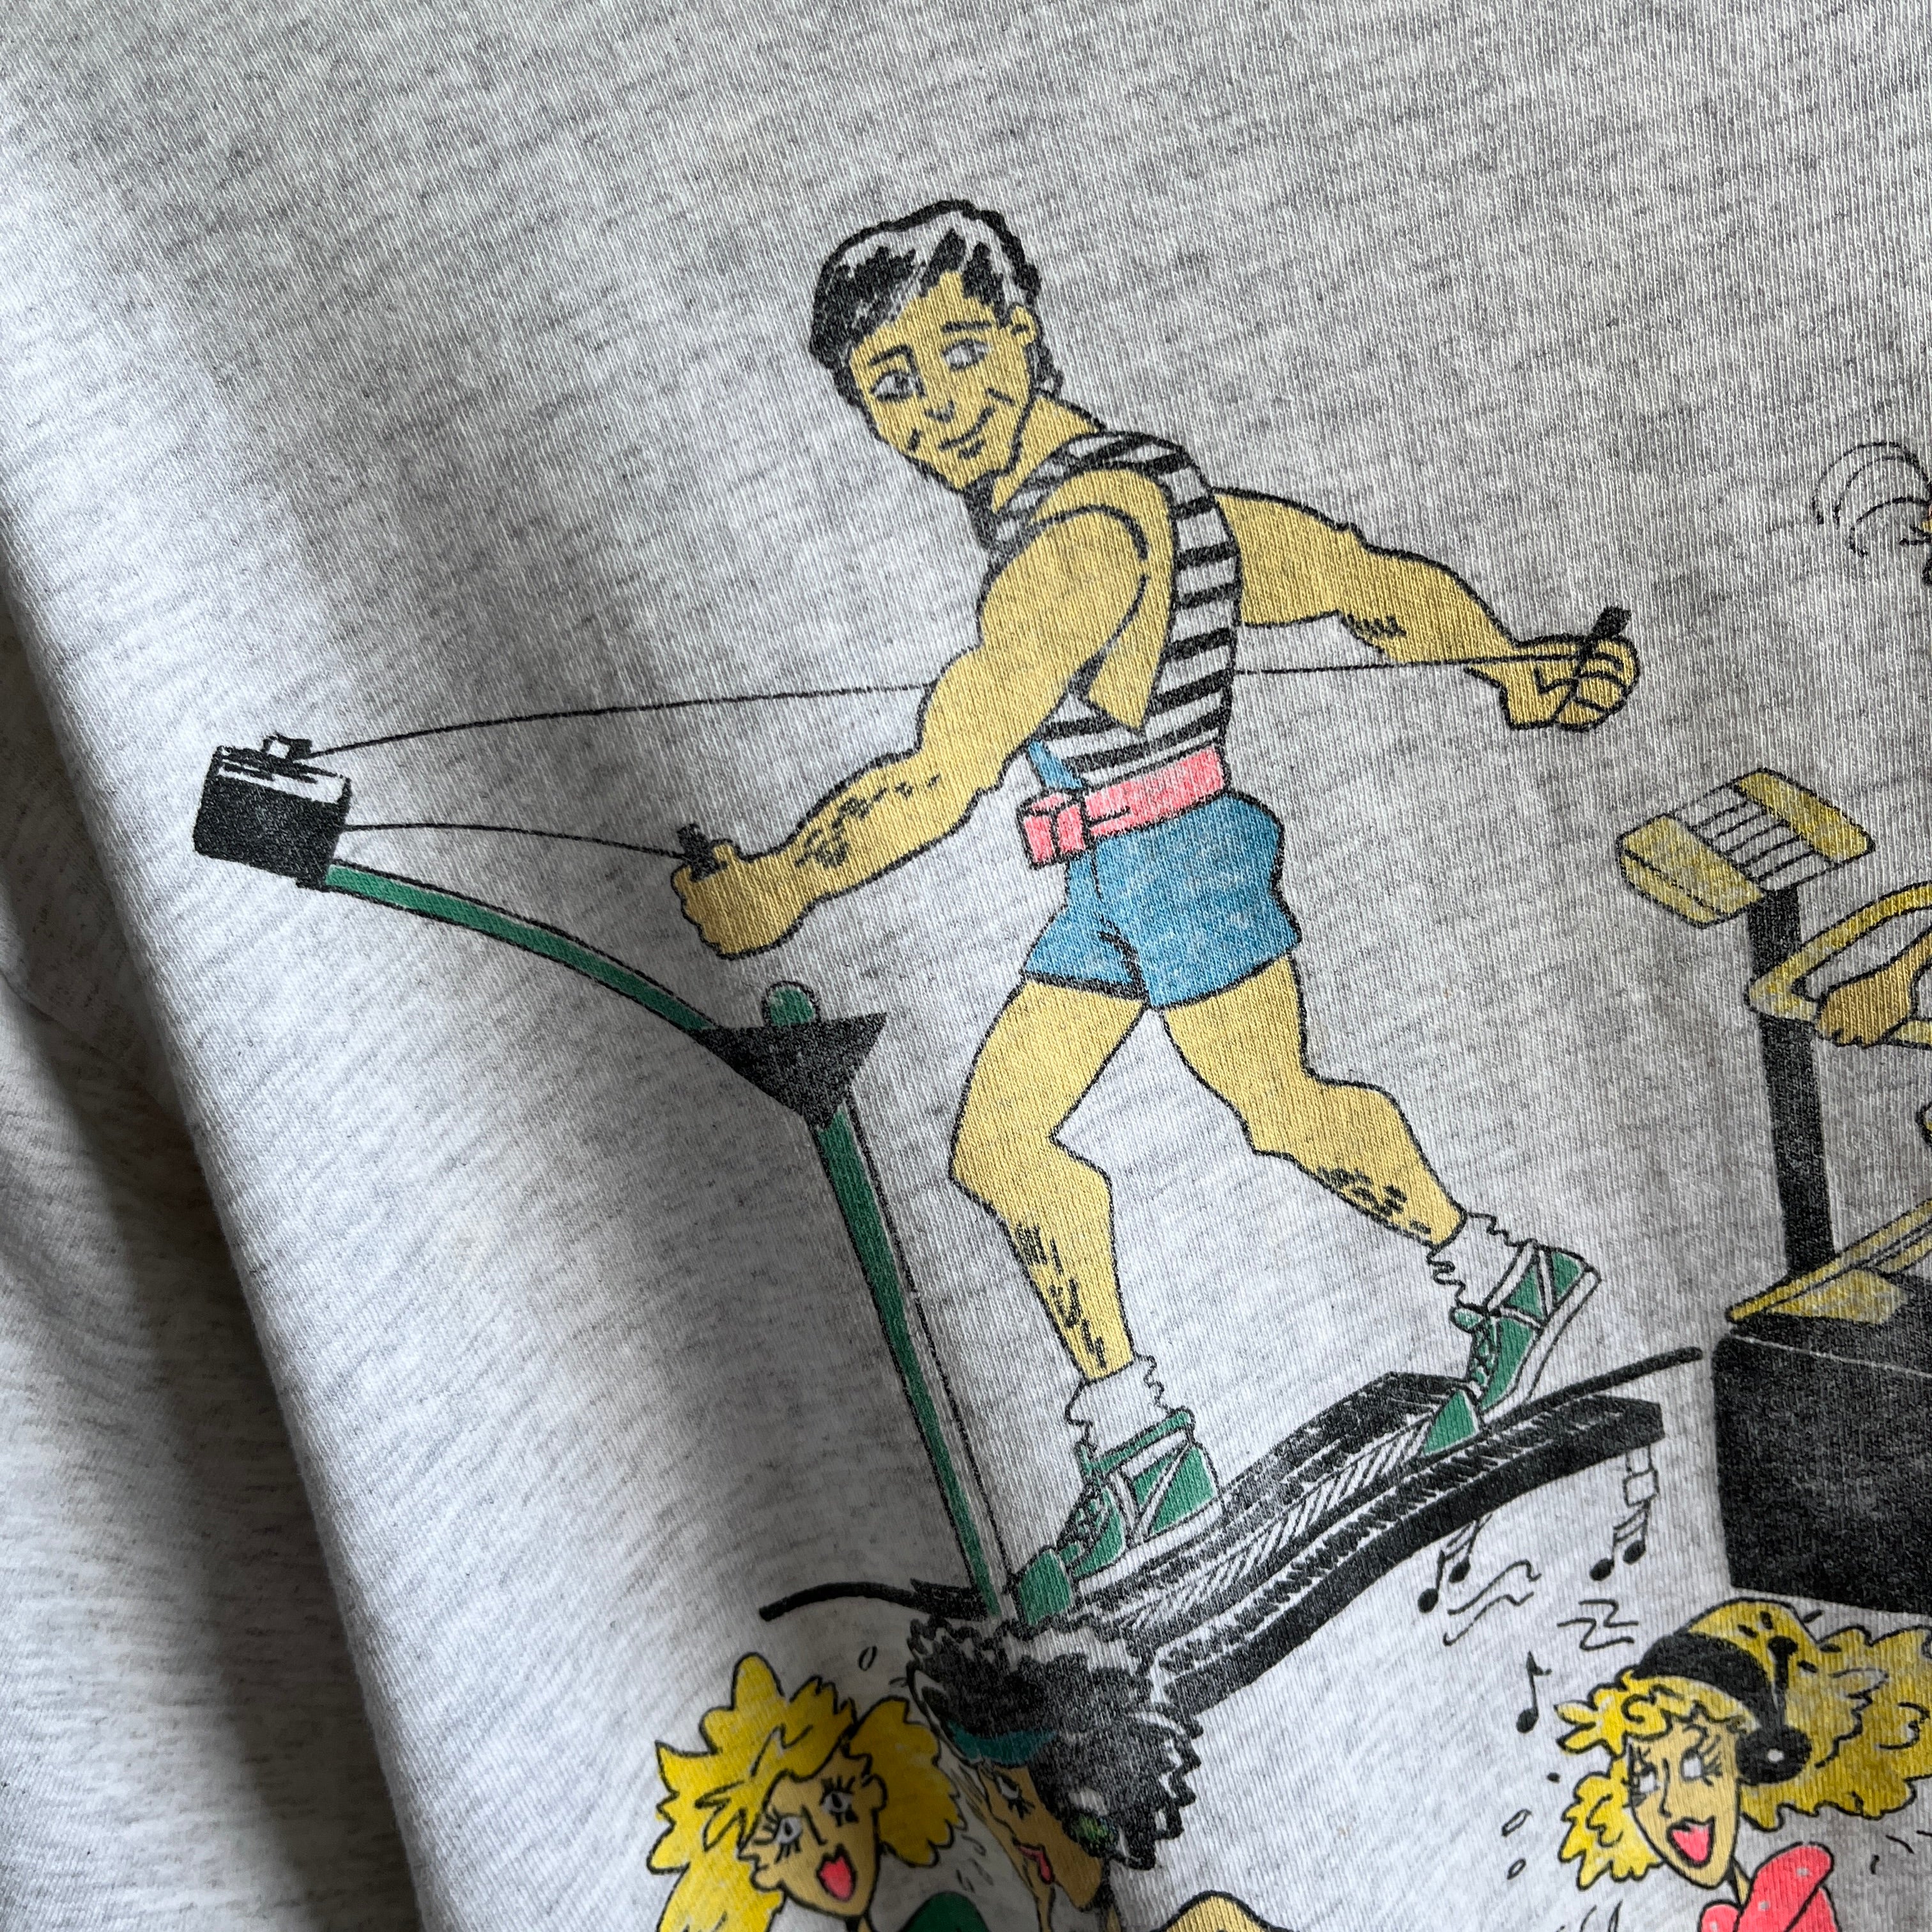 1980s Workout T-Shirt - OMFG